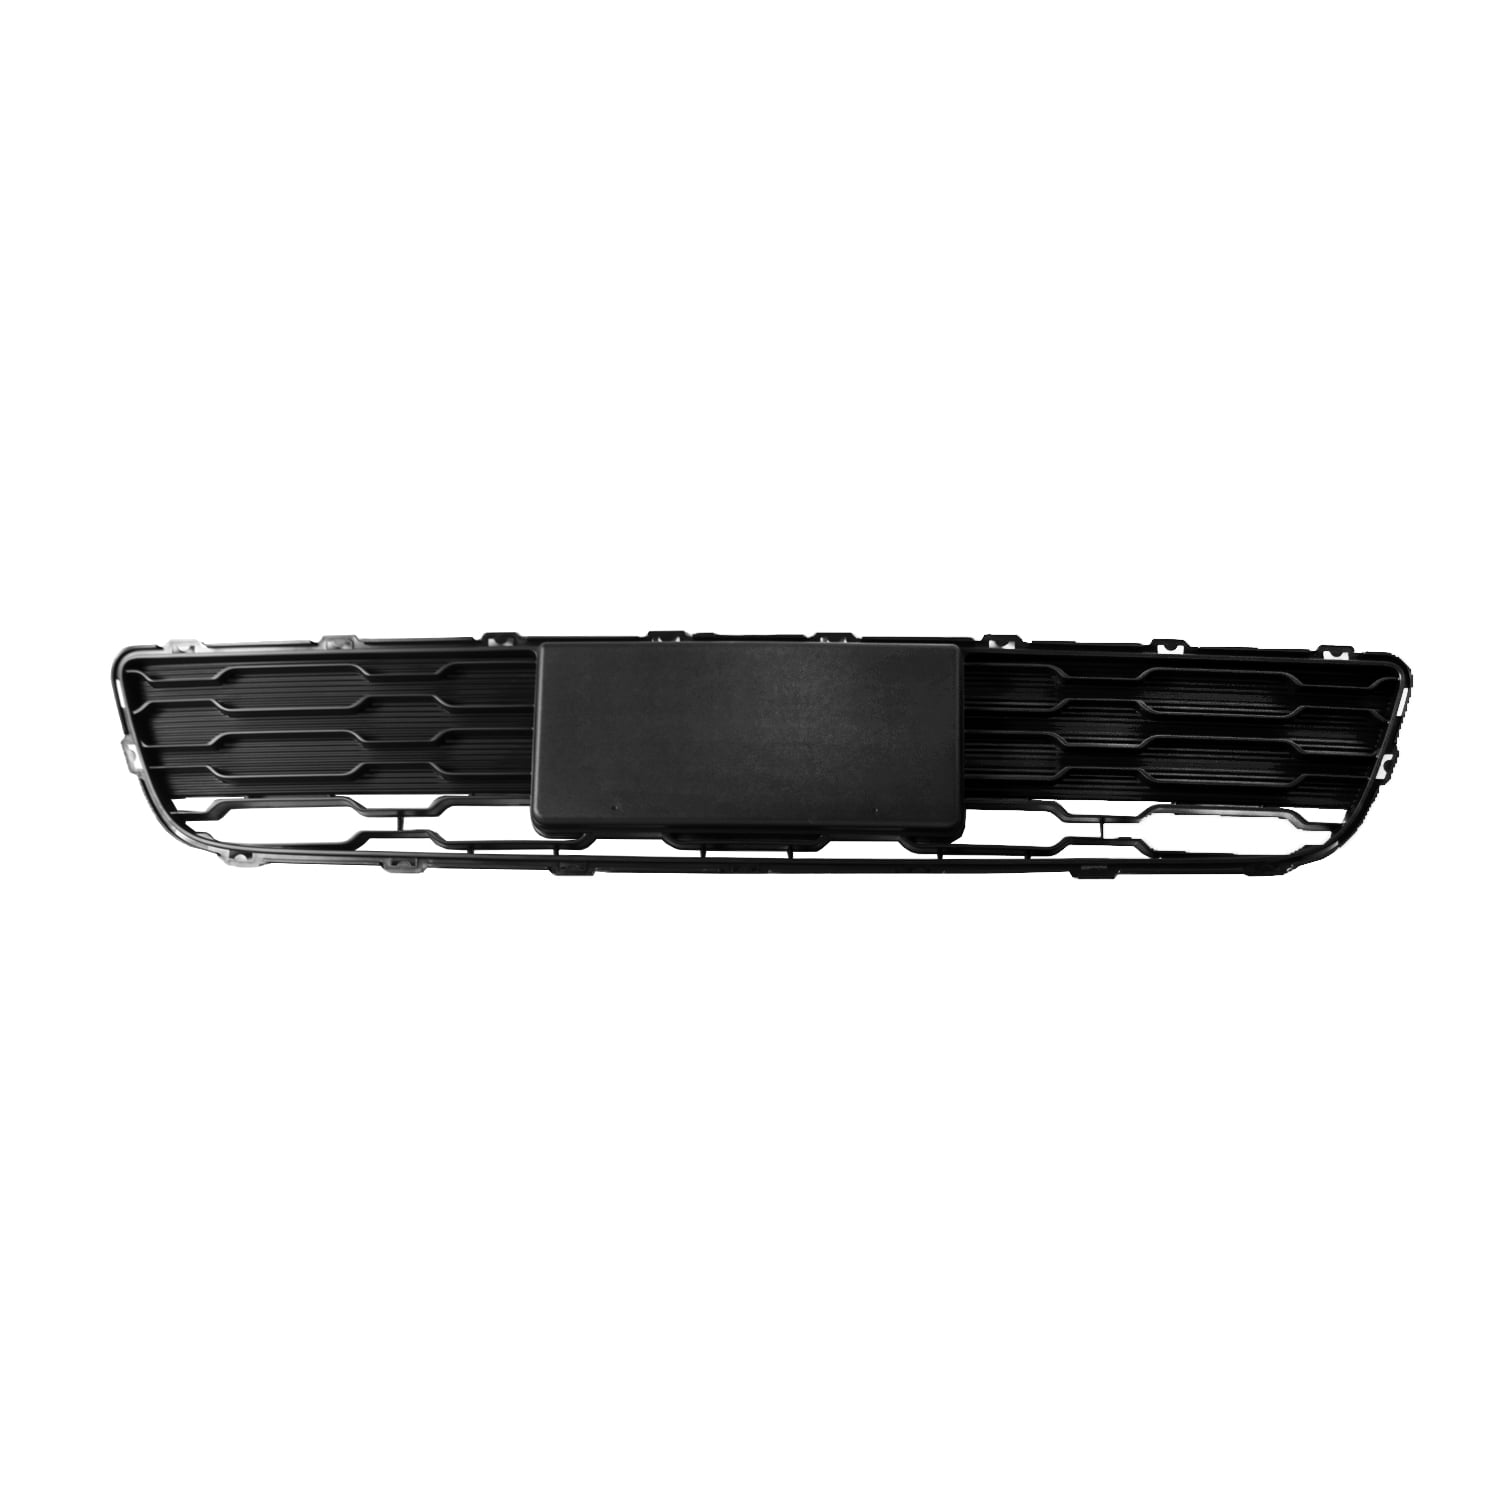 APS Compatible with 2012-2013 Kia Soul Black Lower Bumper Billet Grille Inserts K65962H